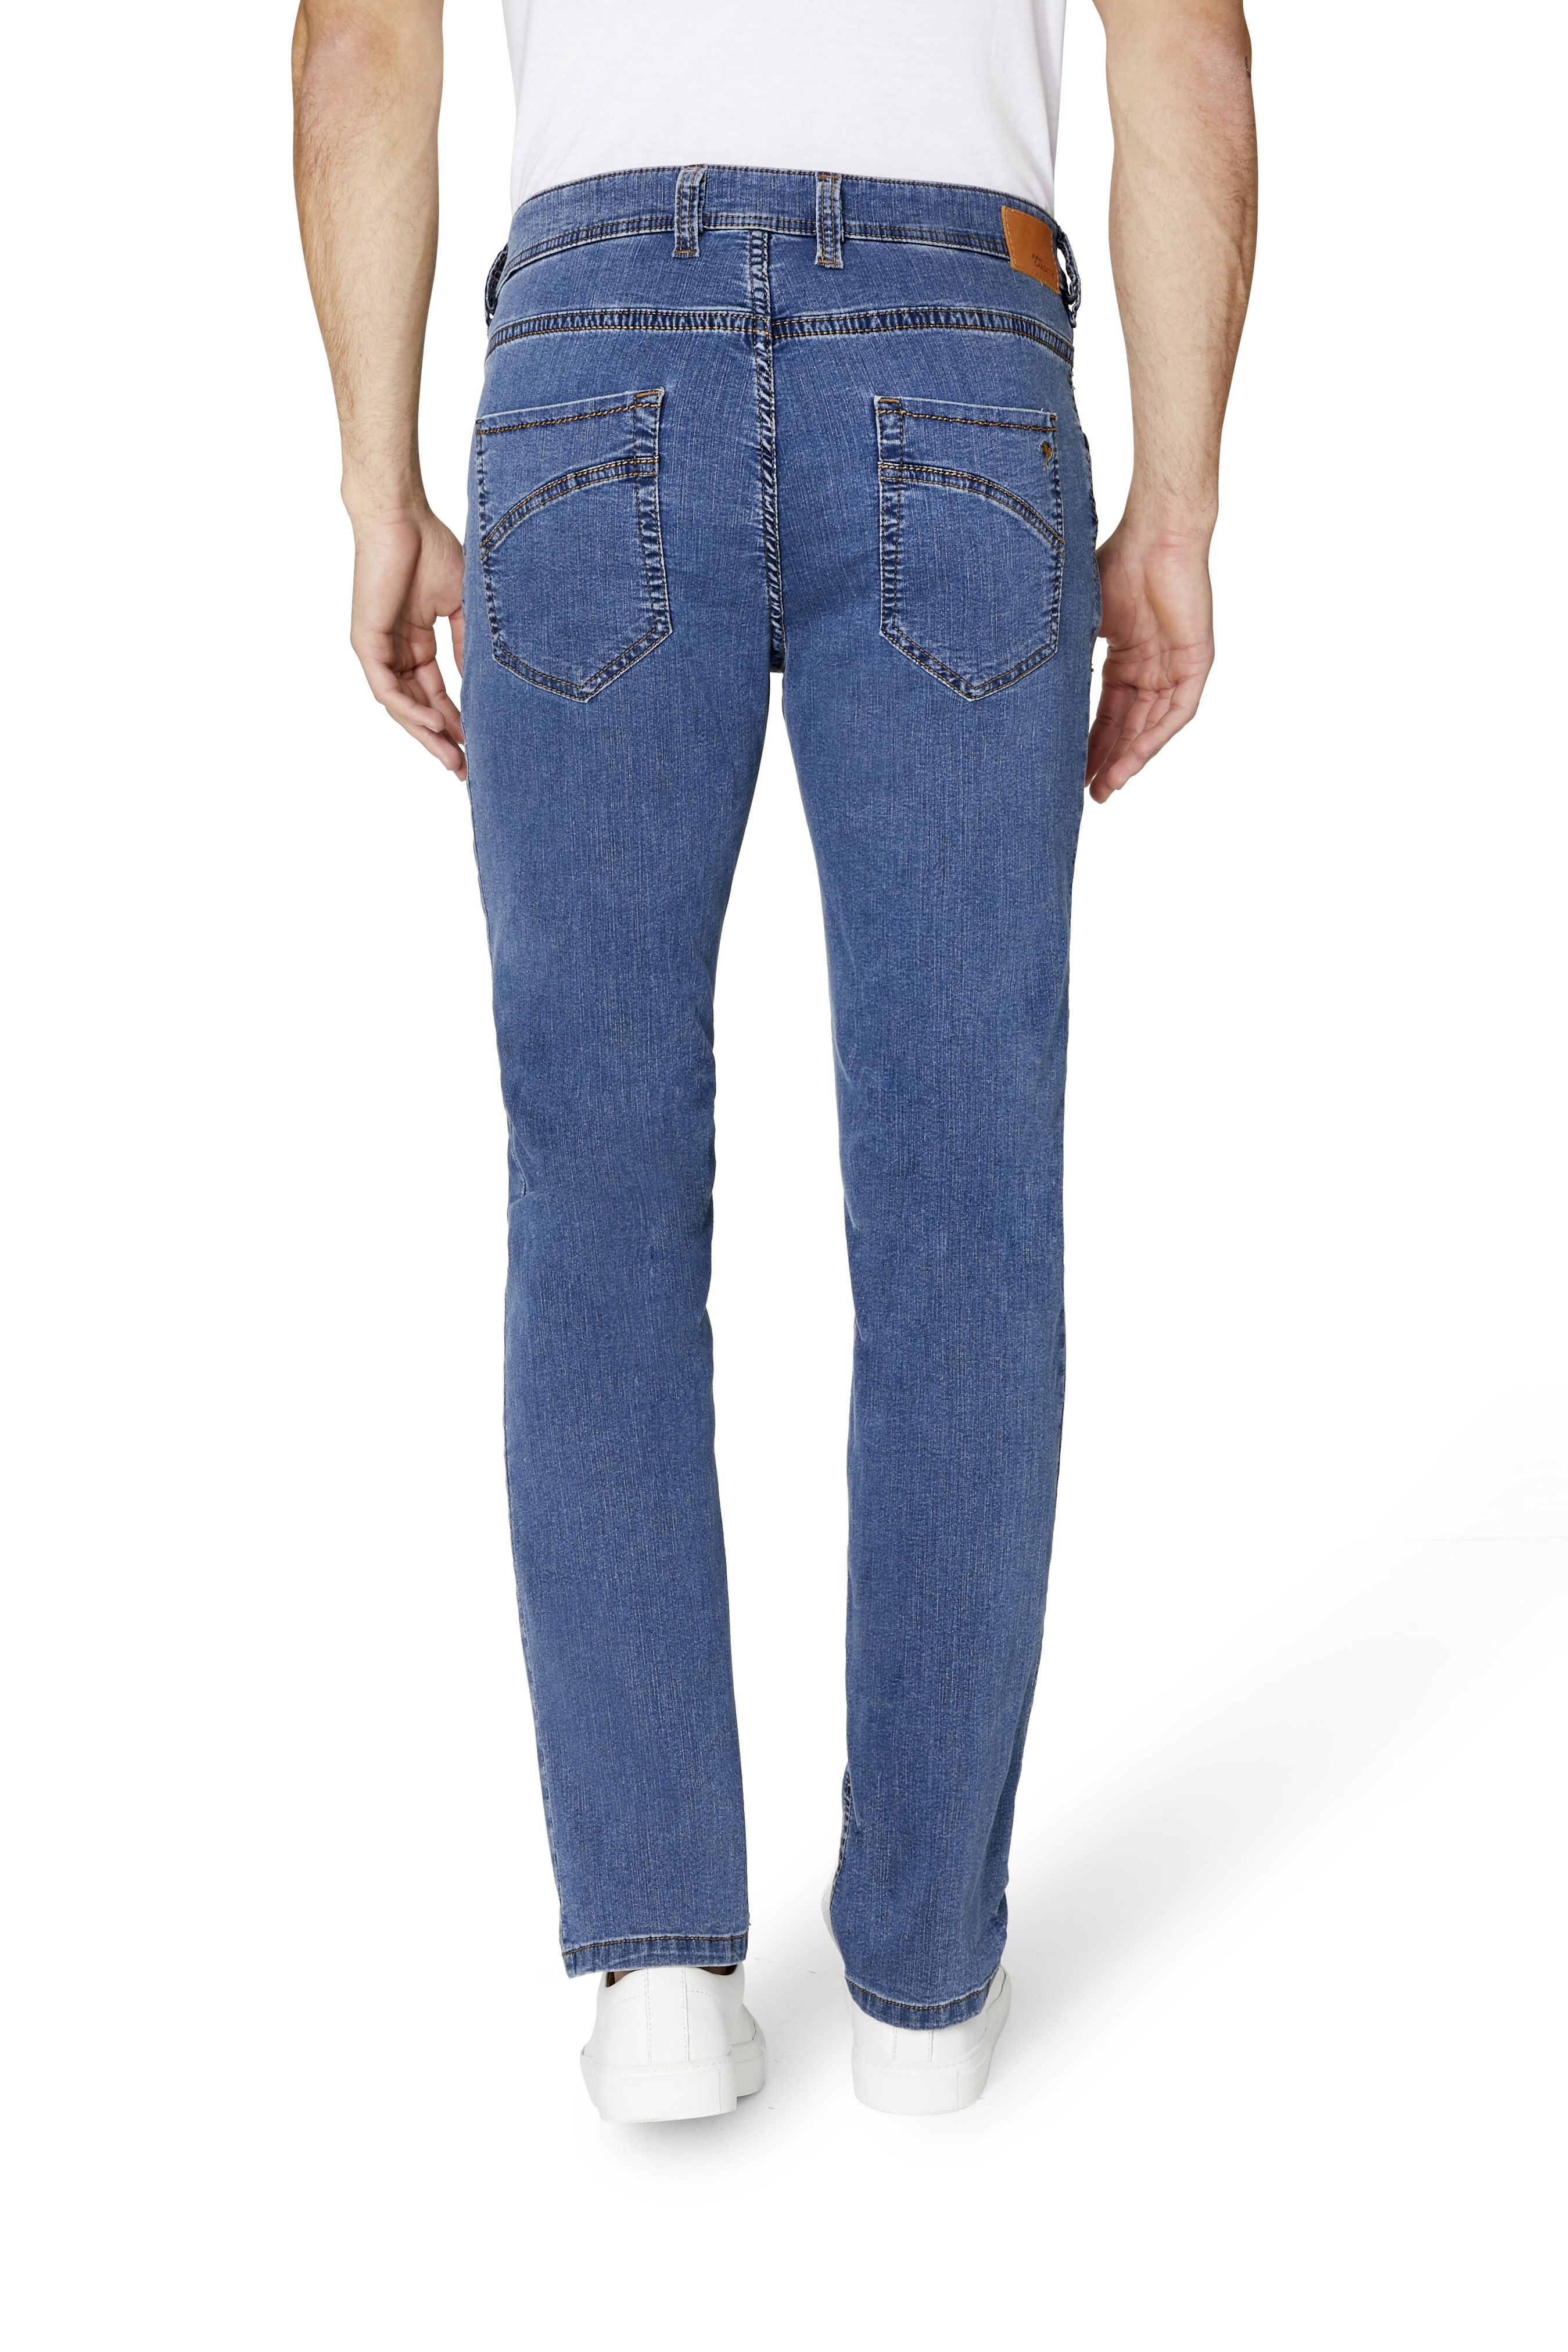 Gardeur Bill-19 AirTrip Denim Jeans Stone Blue | Jan Rozing Men's Fashion